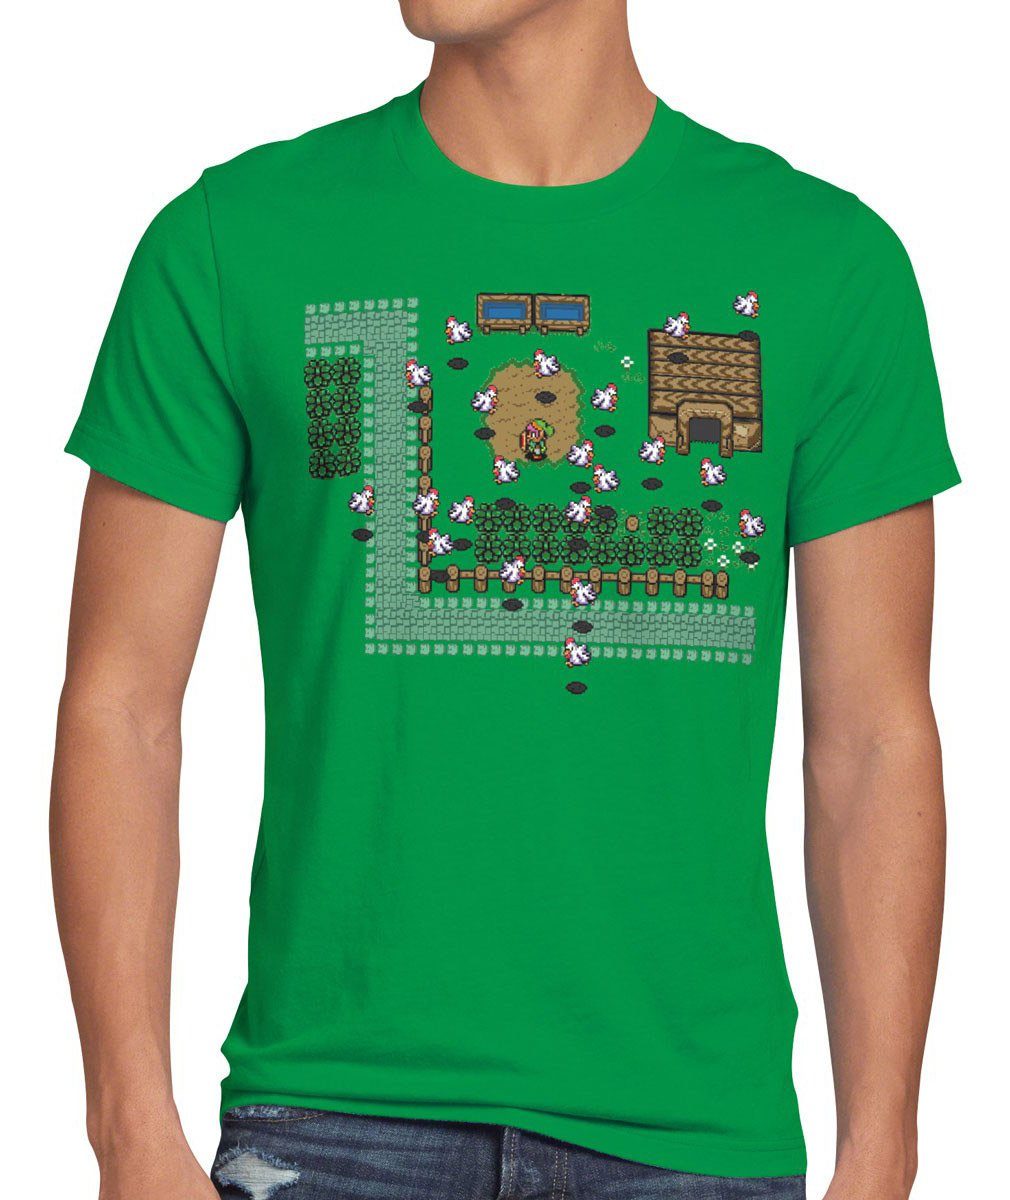 grün Fan Print-Shirt Retro Game T-Shirt Link zelda switch gameboy Pixel style3 Kult Herren Spiel Gamer